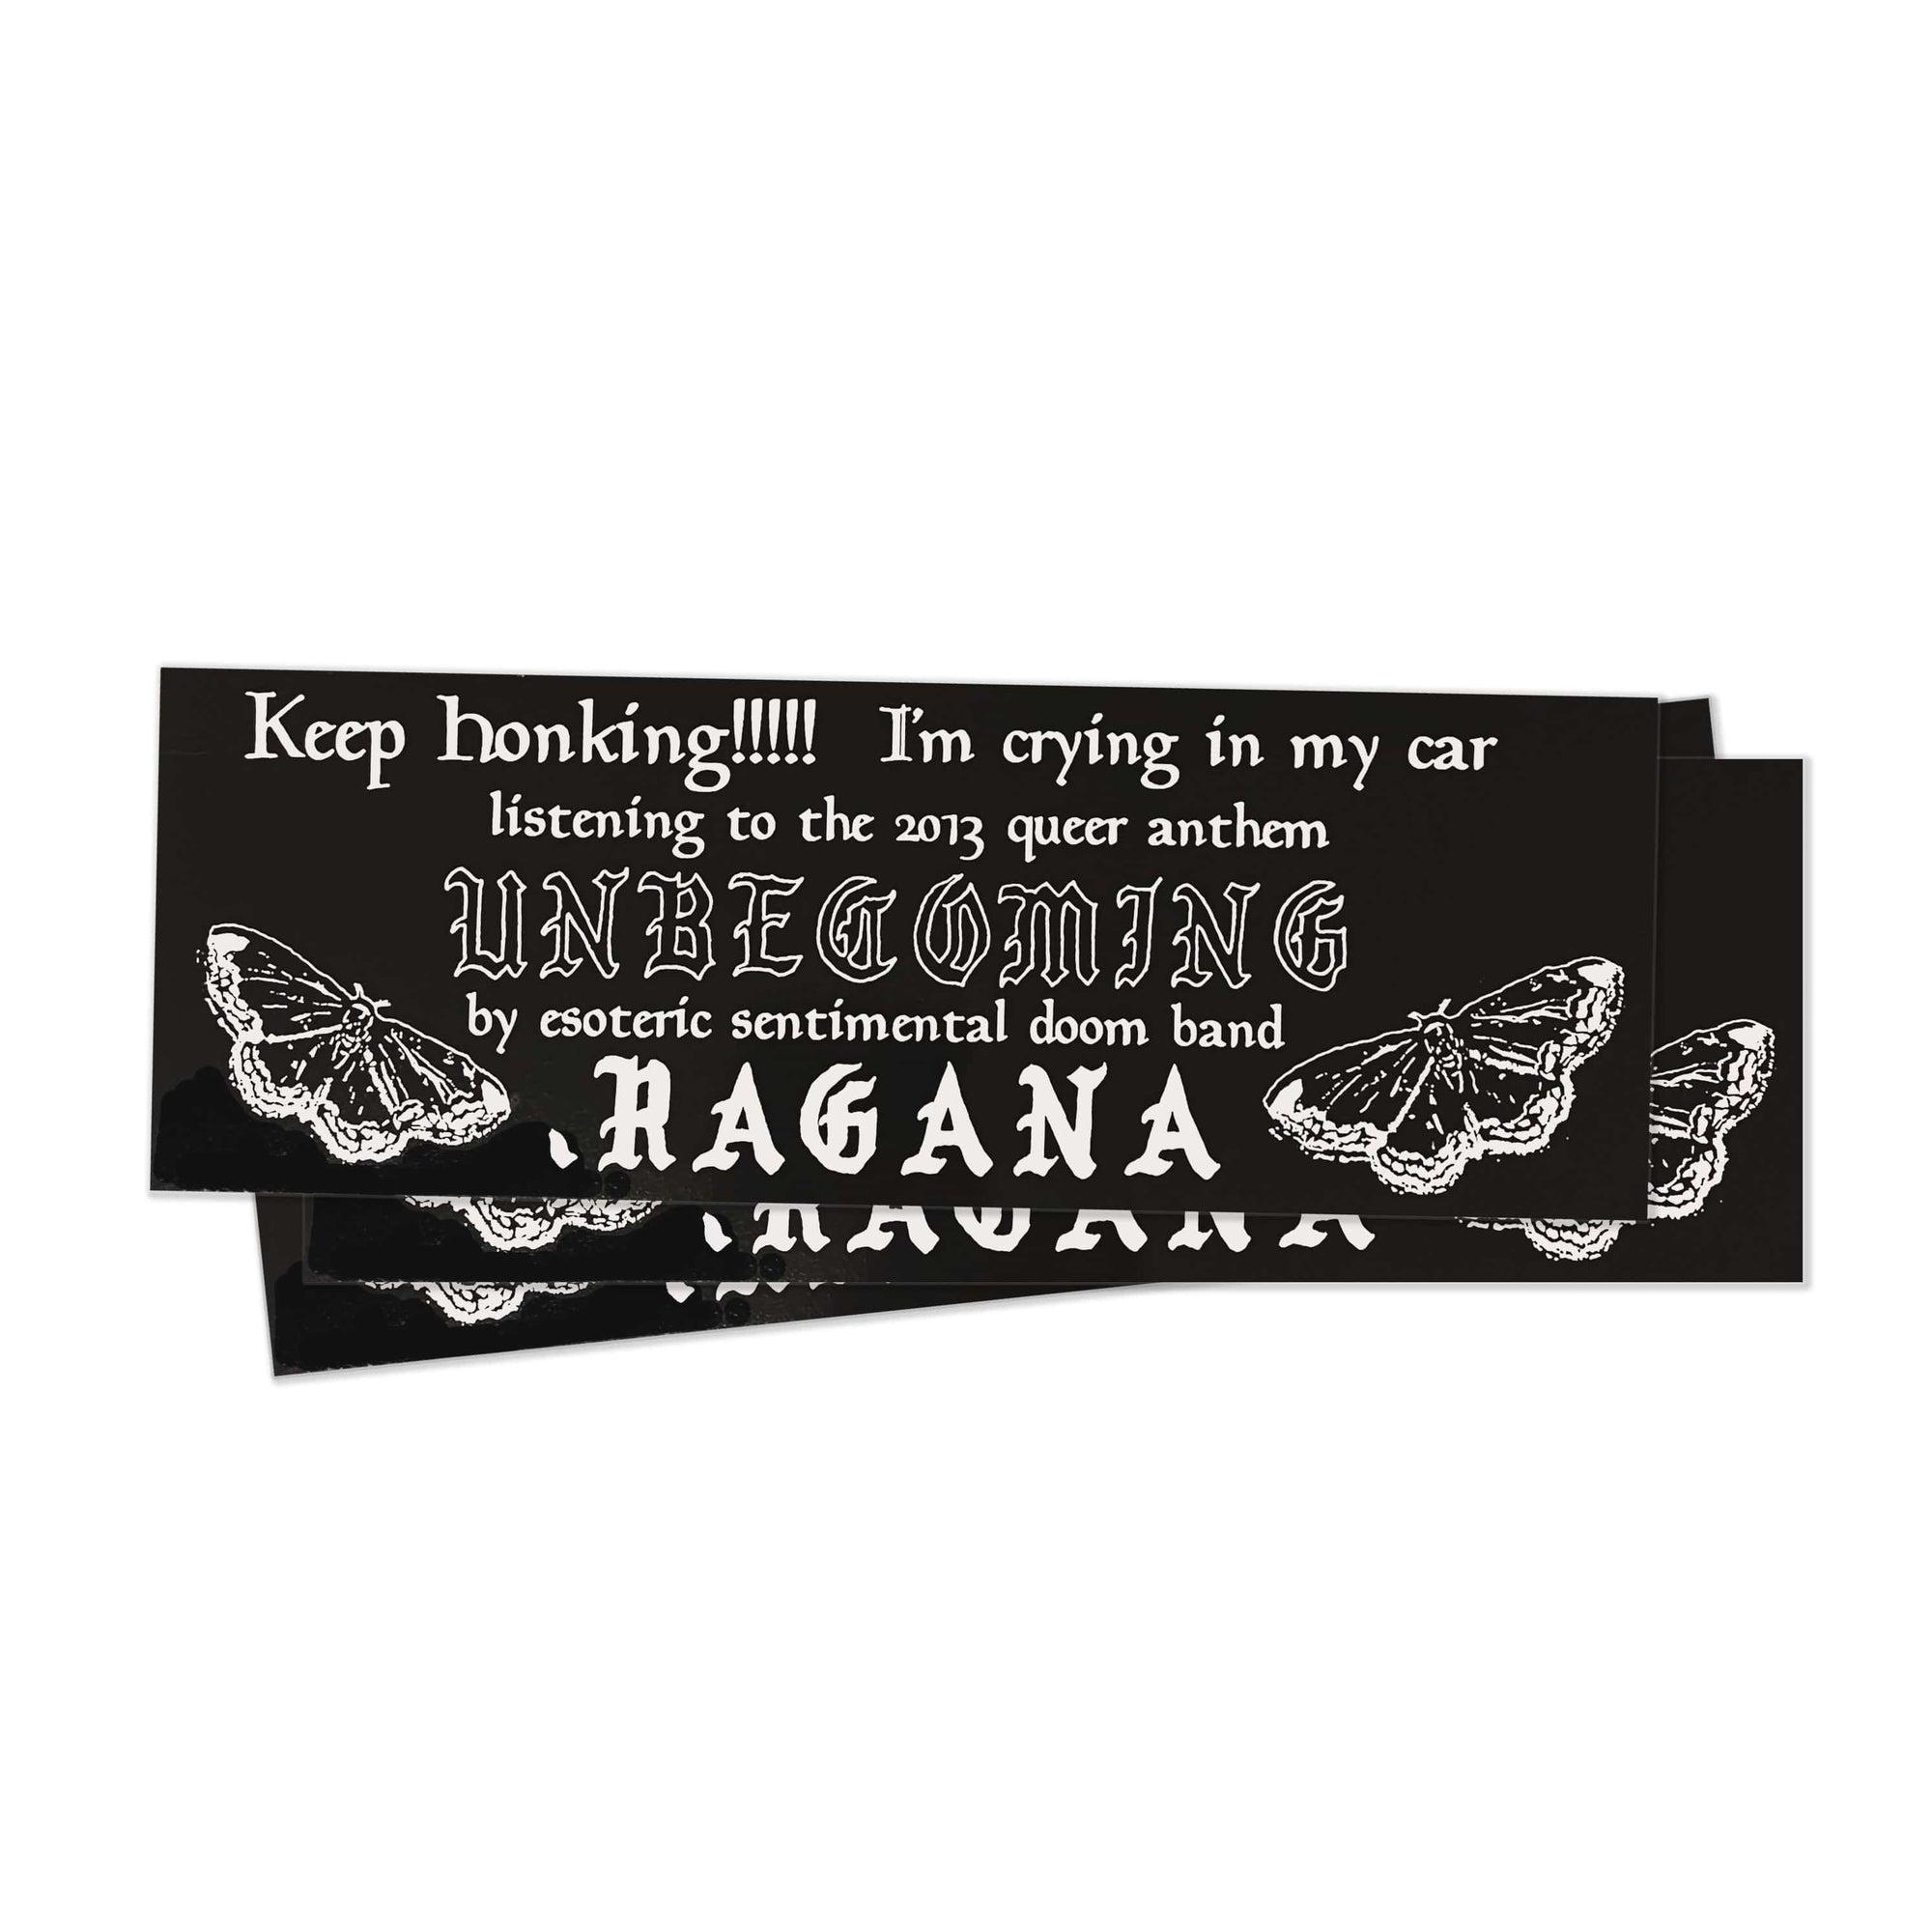 The Flenser Apparel Ragana "Keep Honking" Sticker